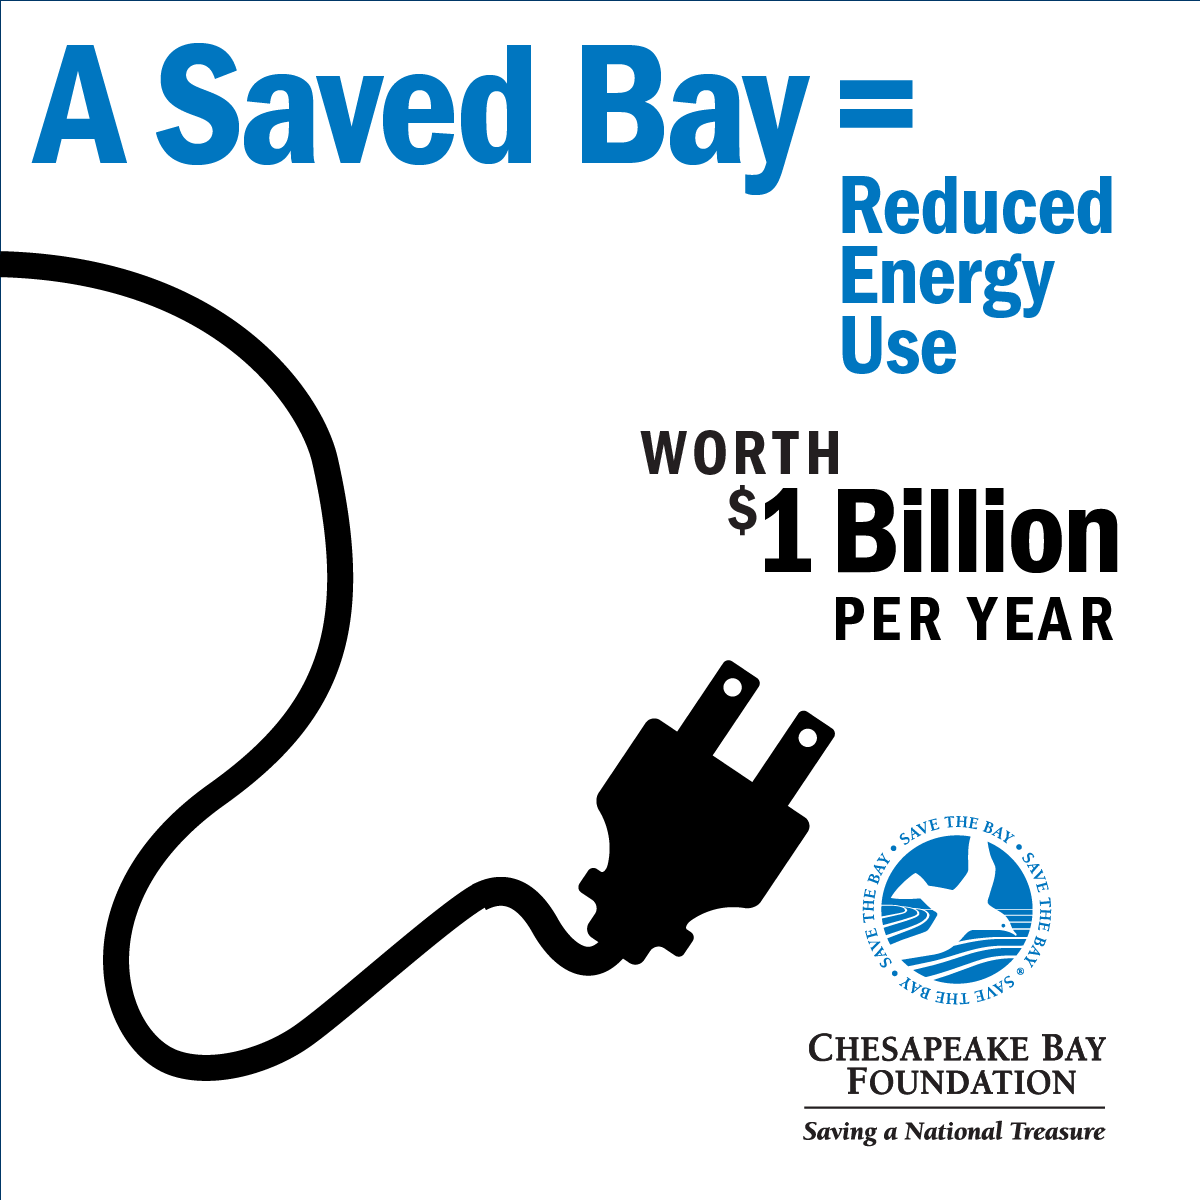 A Saved Bay = Stabilized Weather worth $1 Billion per year